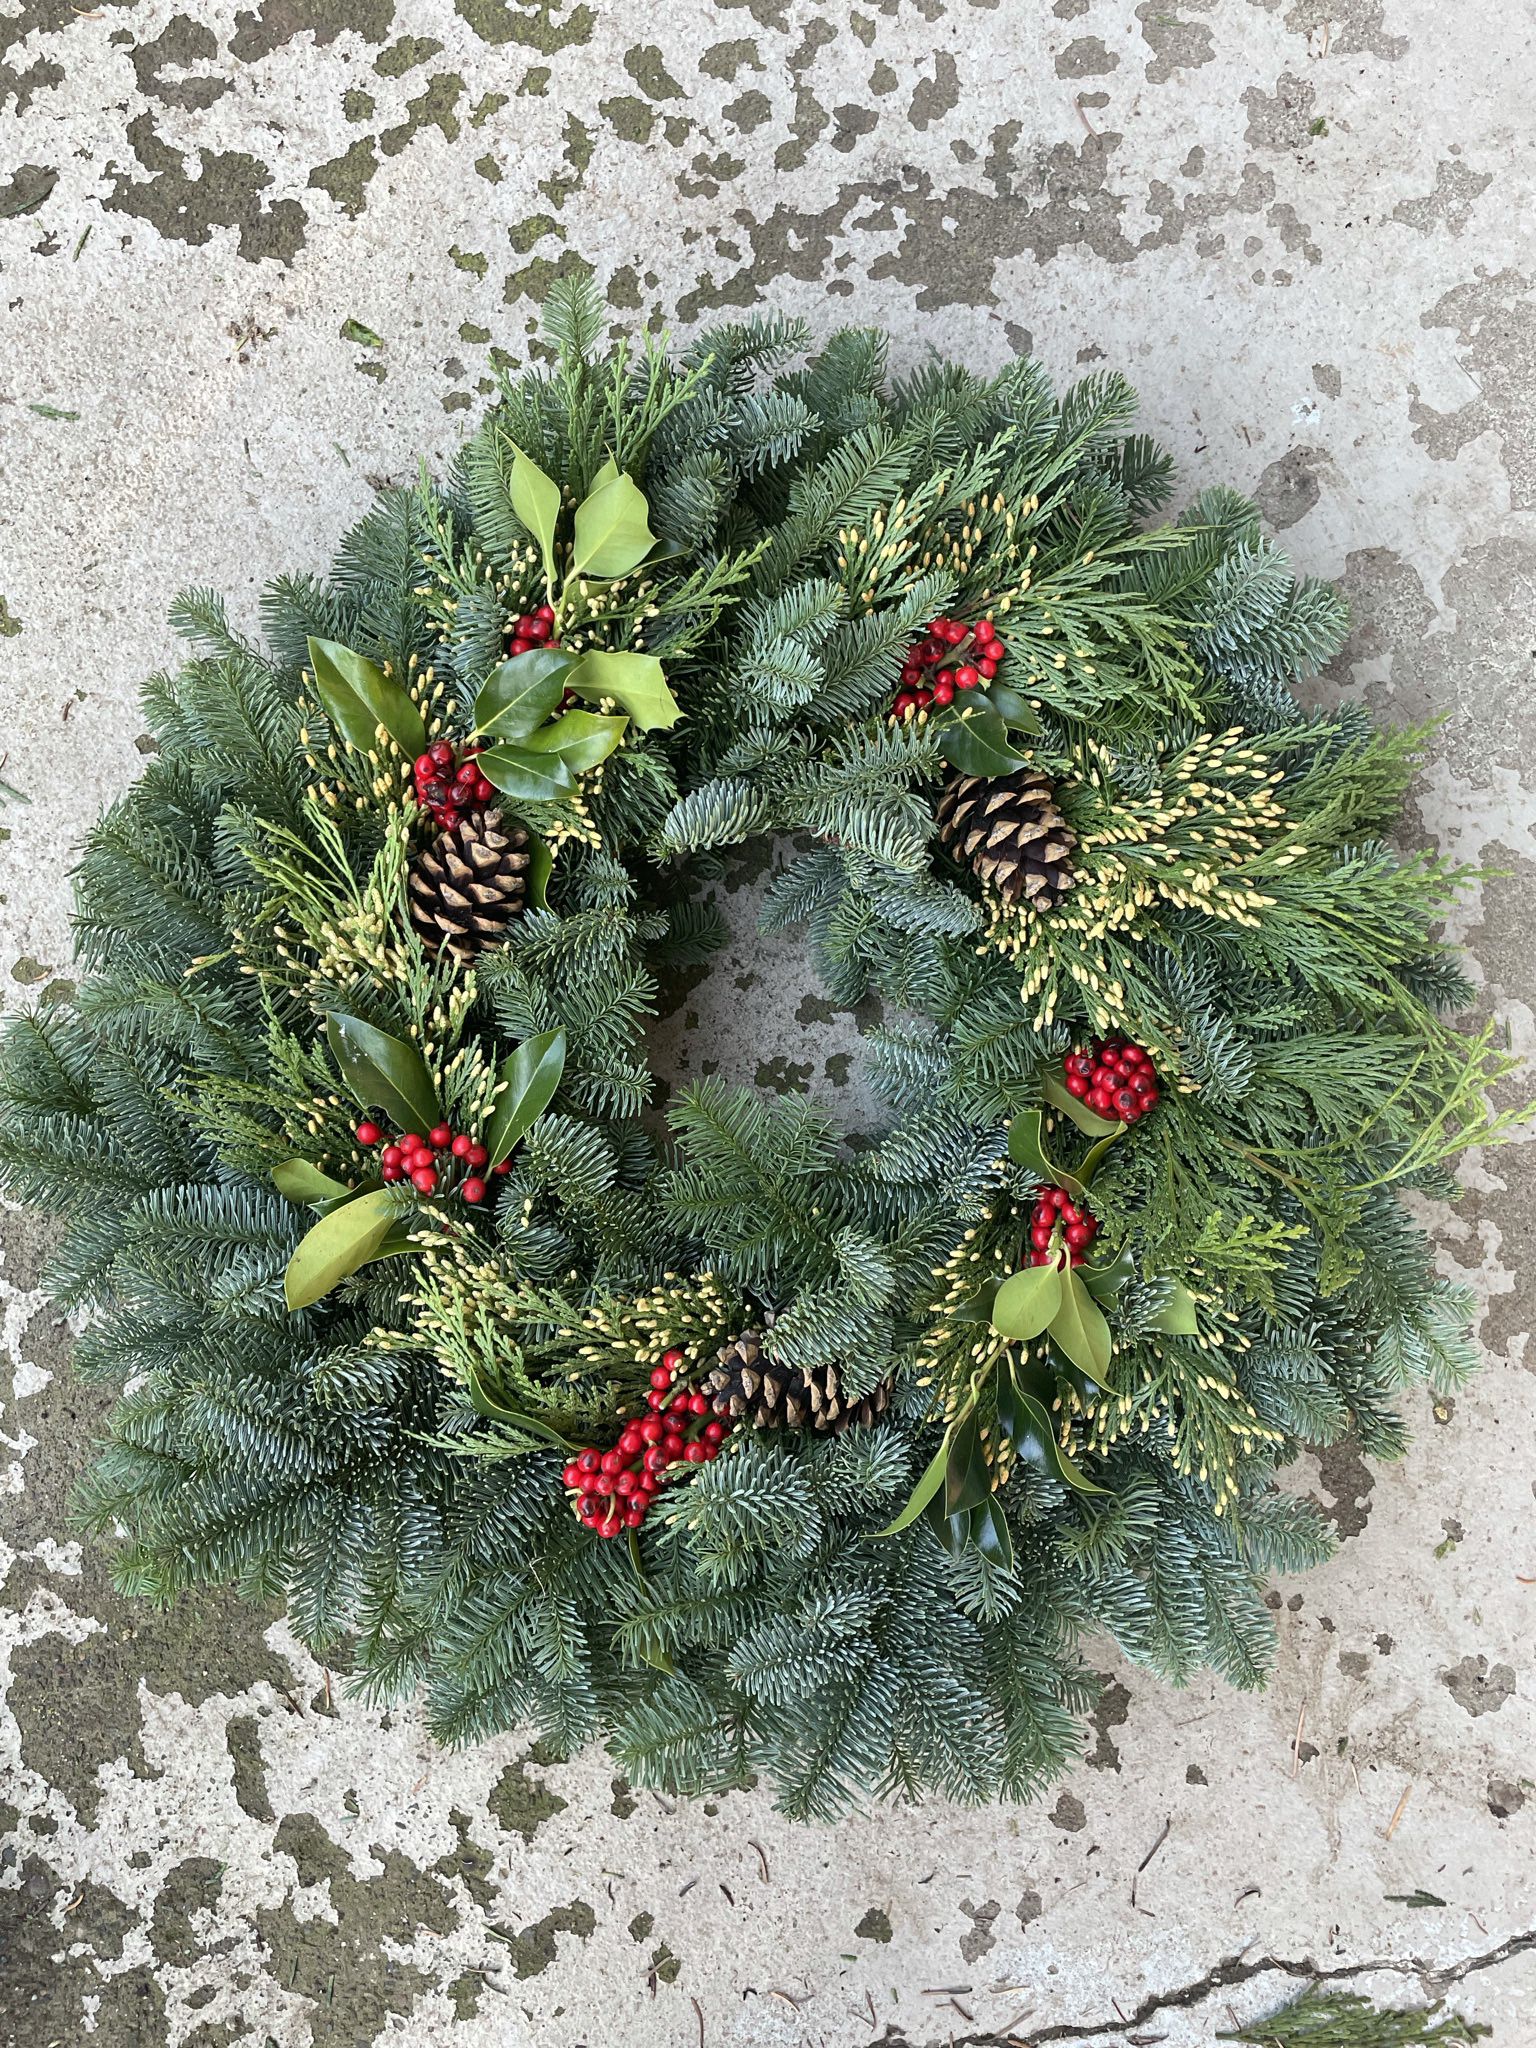 Wreaths $25